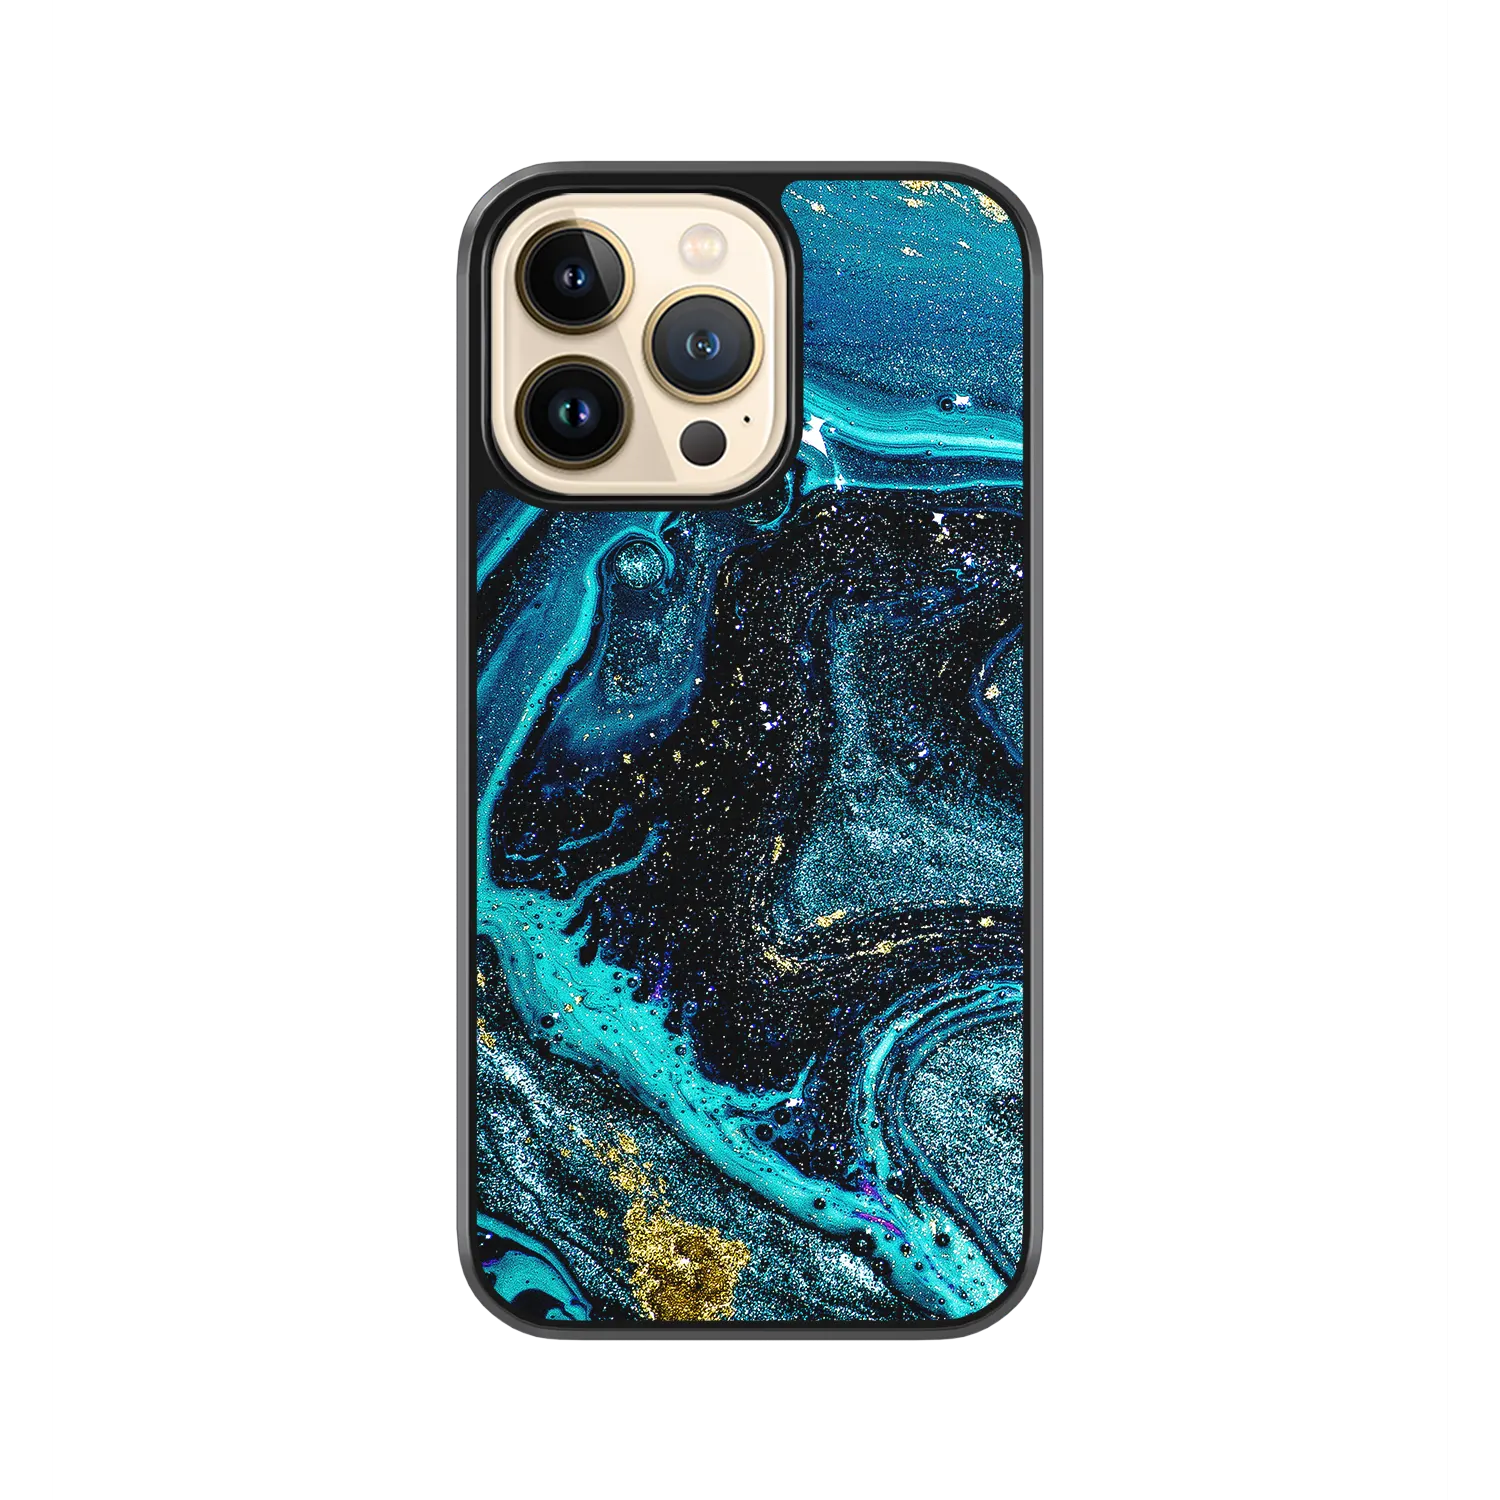 Poseidon iphone 12 pro max cover